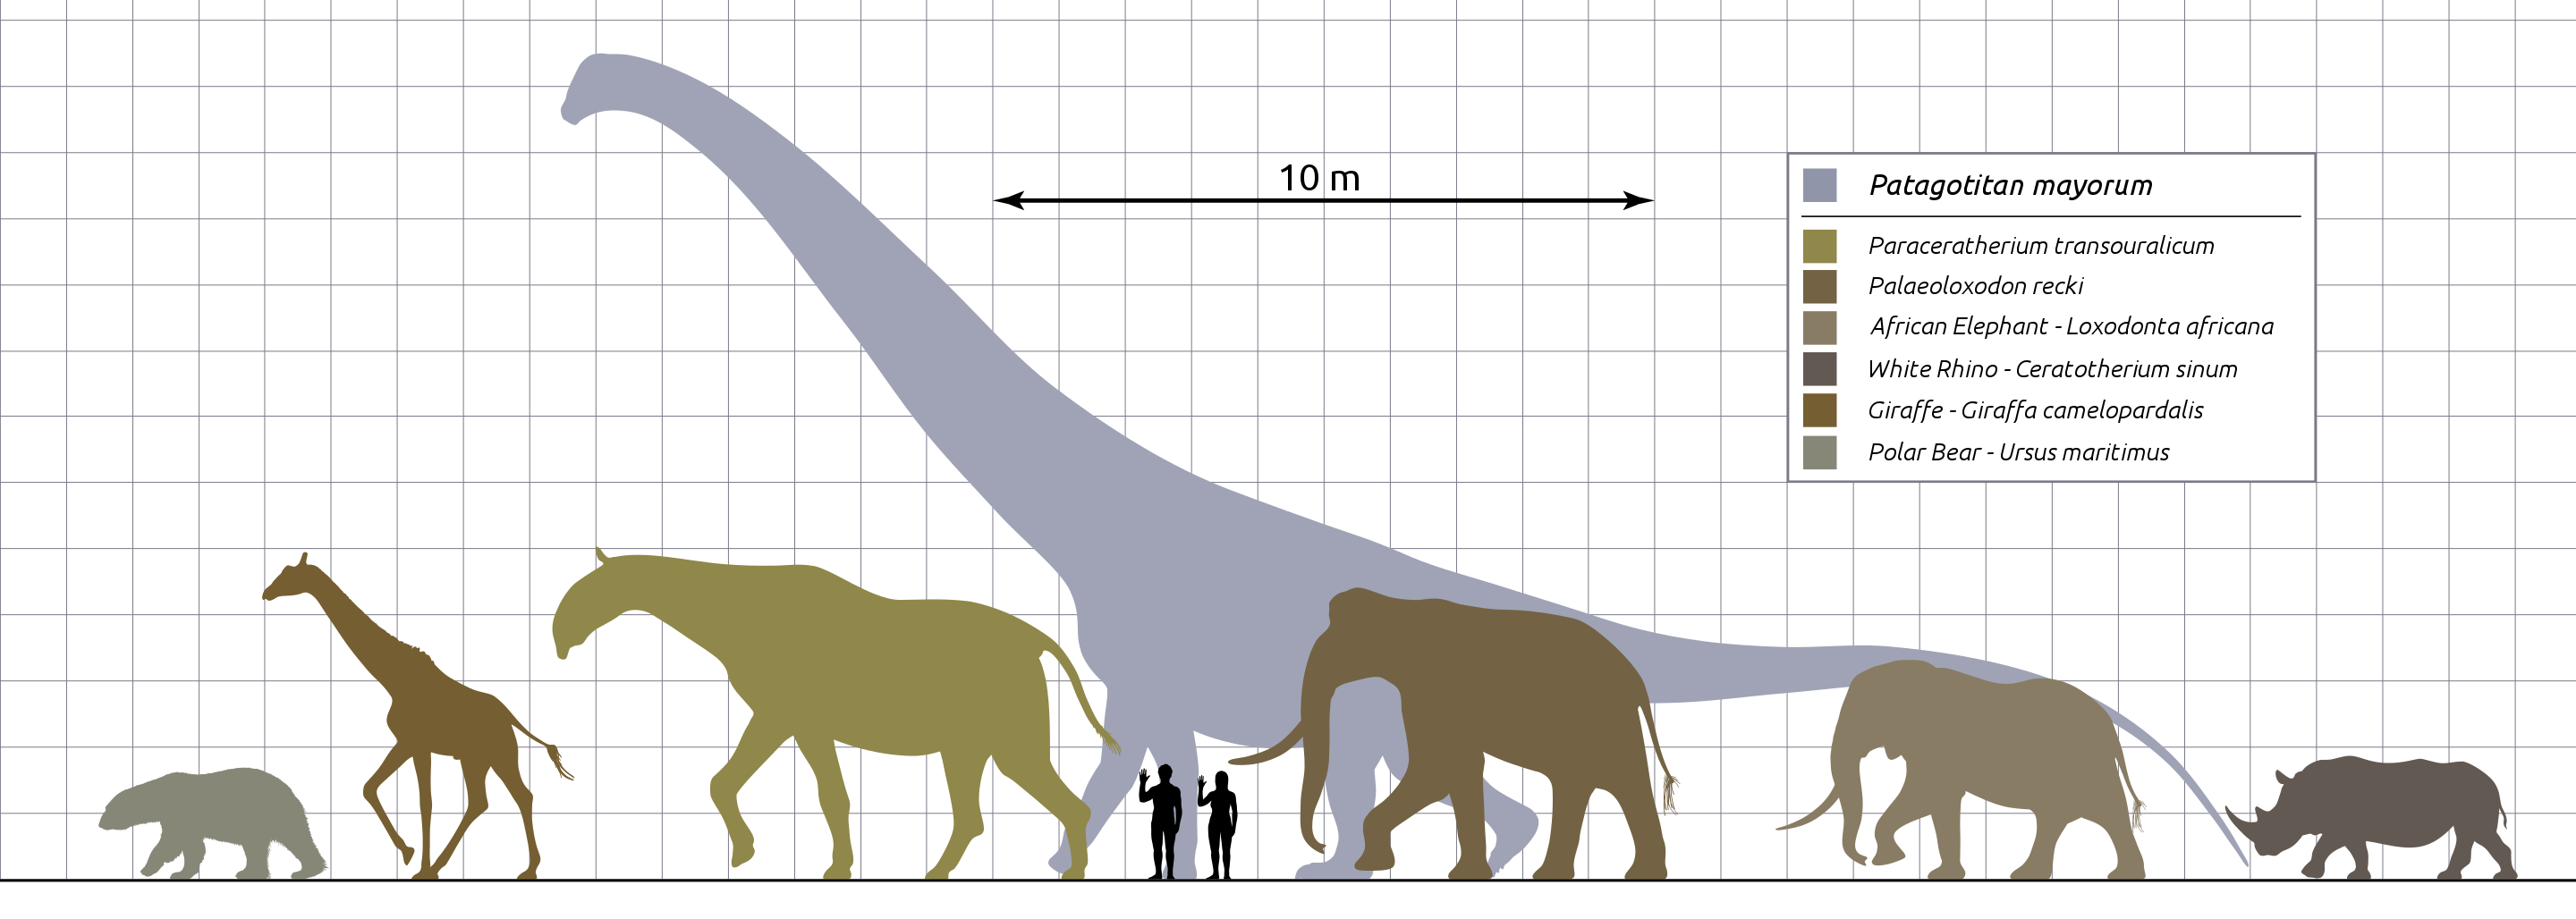 2880px Patagotitan vs Mammals Scale Diagram SVG Steveoc86.svg